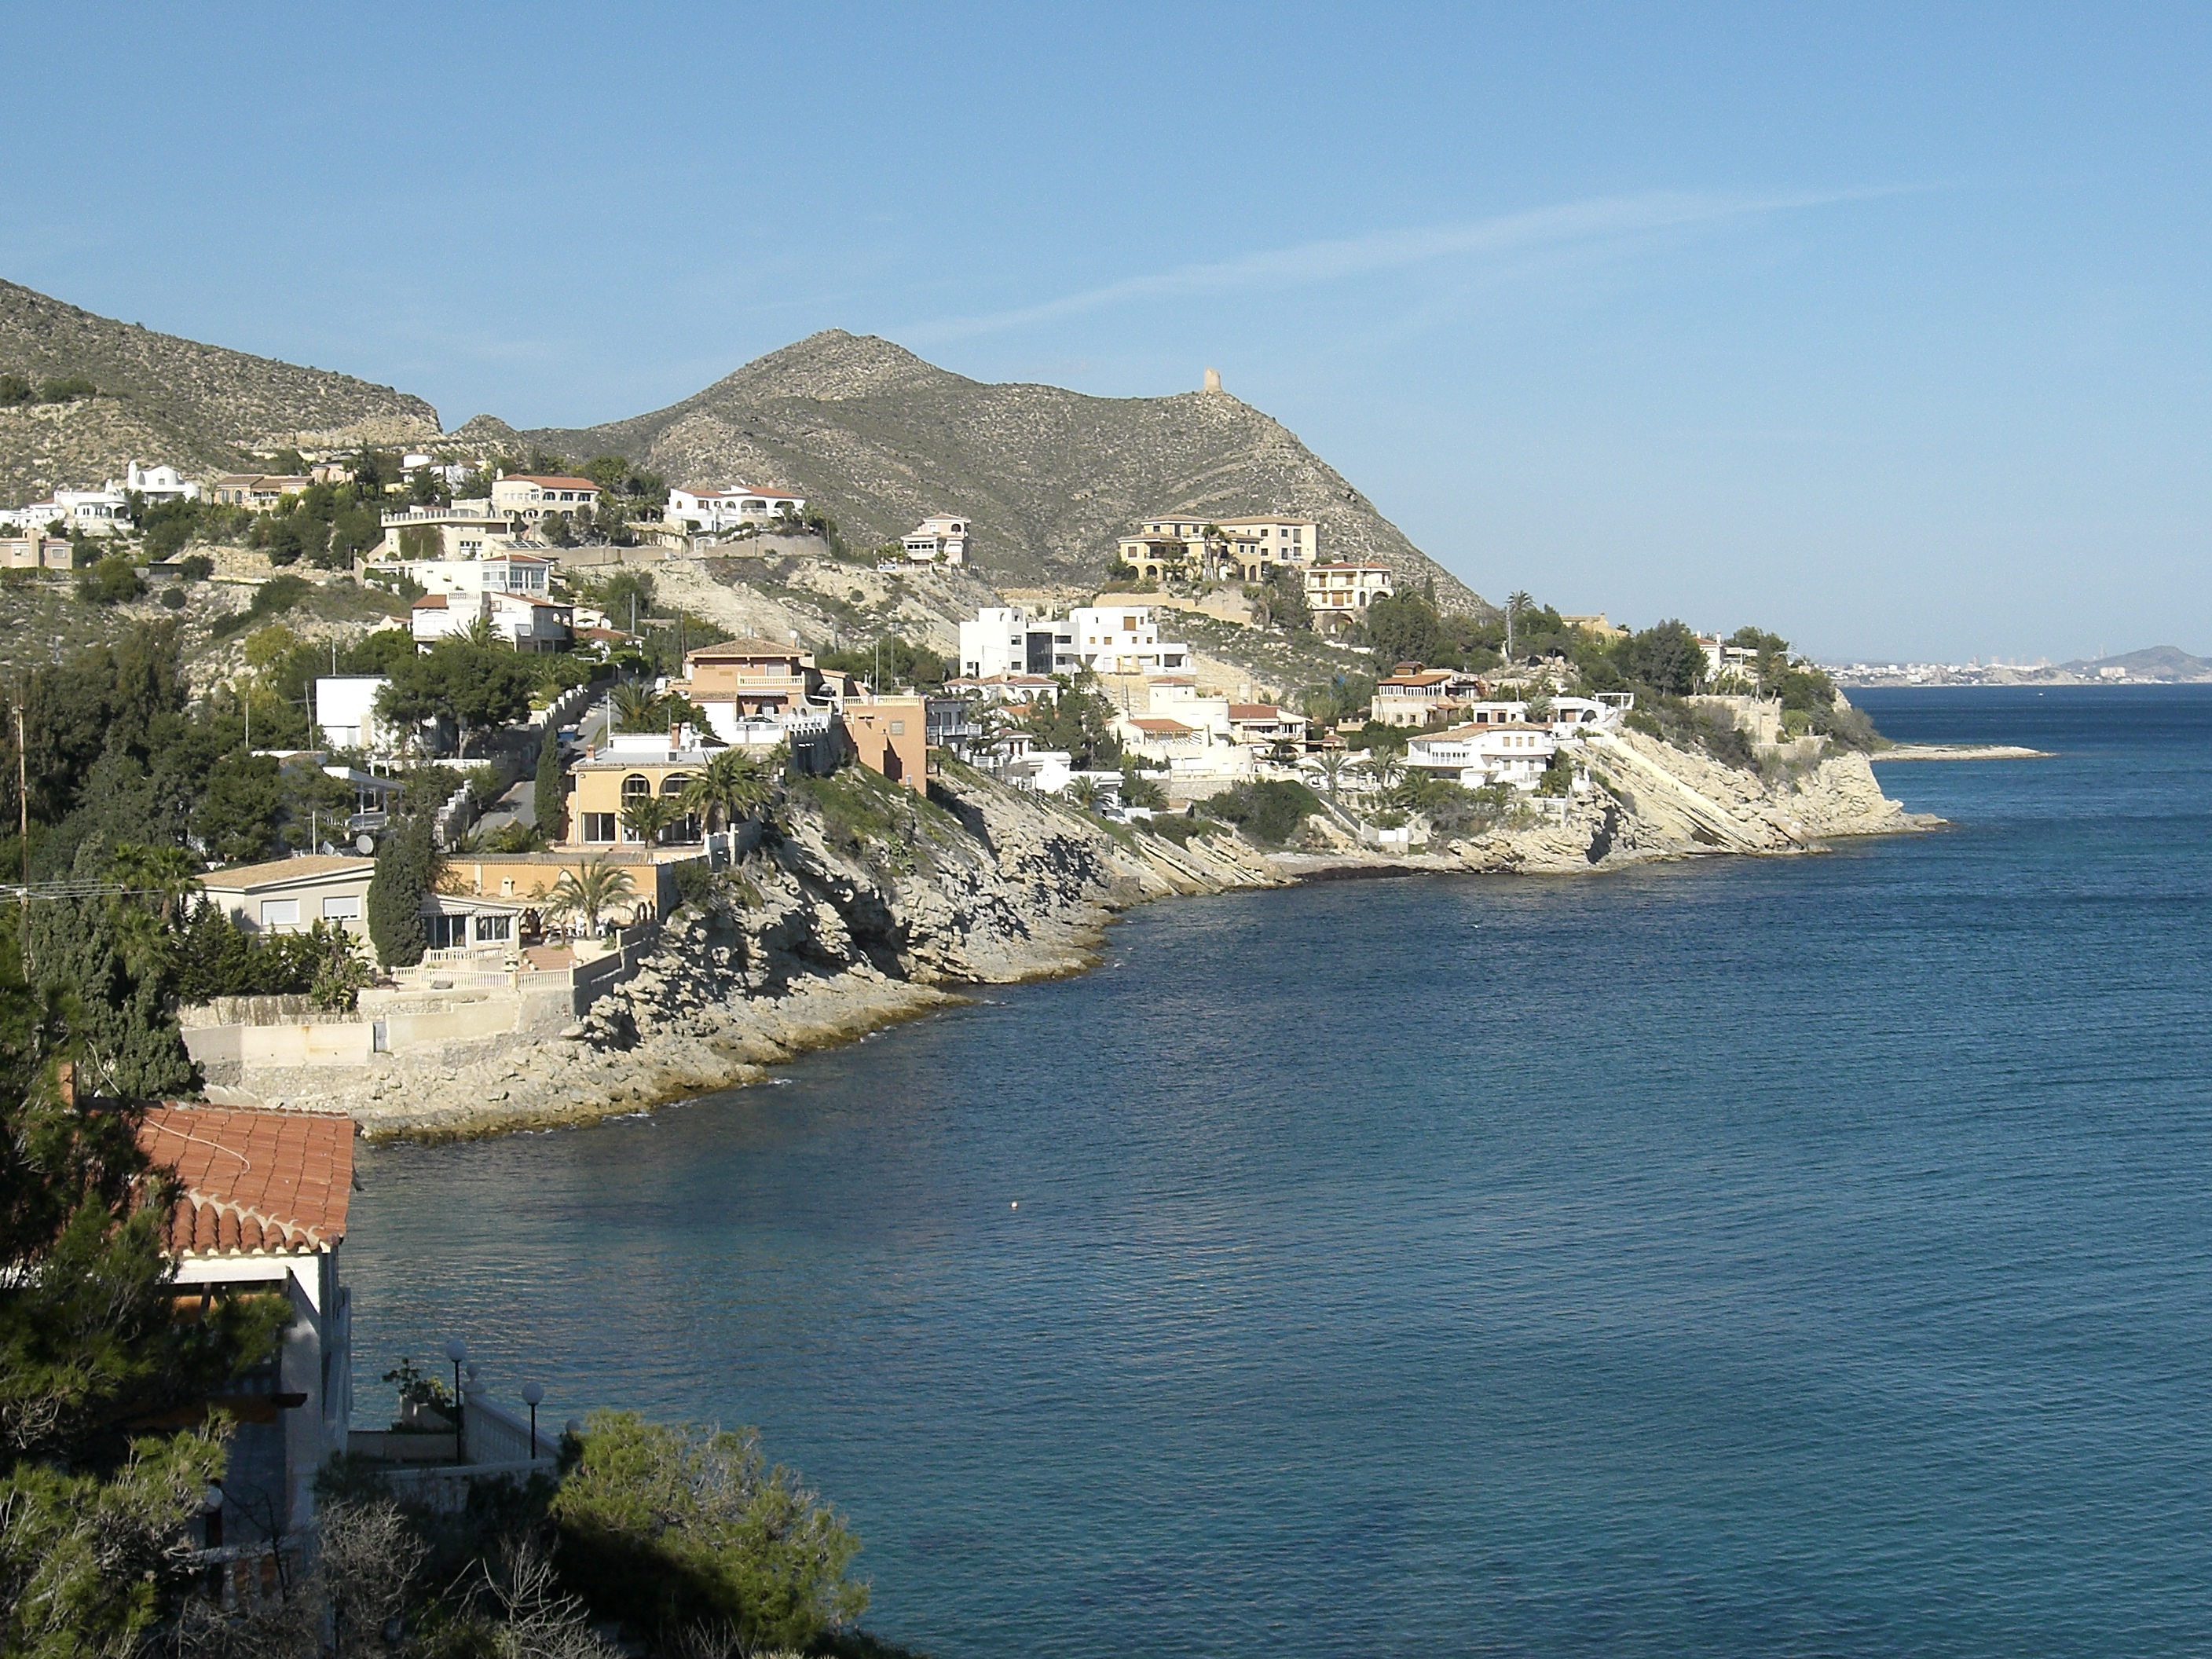 File:Coastal area, El Campello, Alicante.jpg - Wikimedia Commons